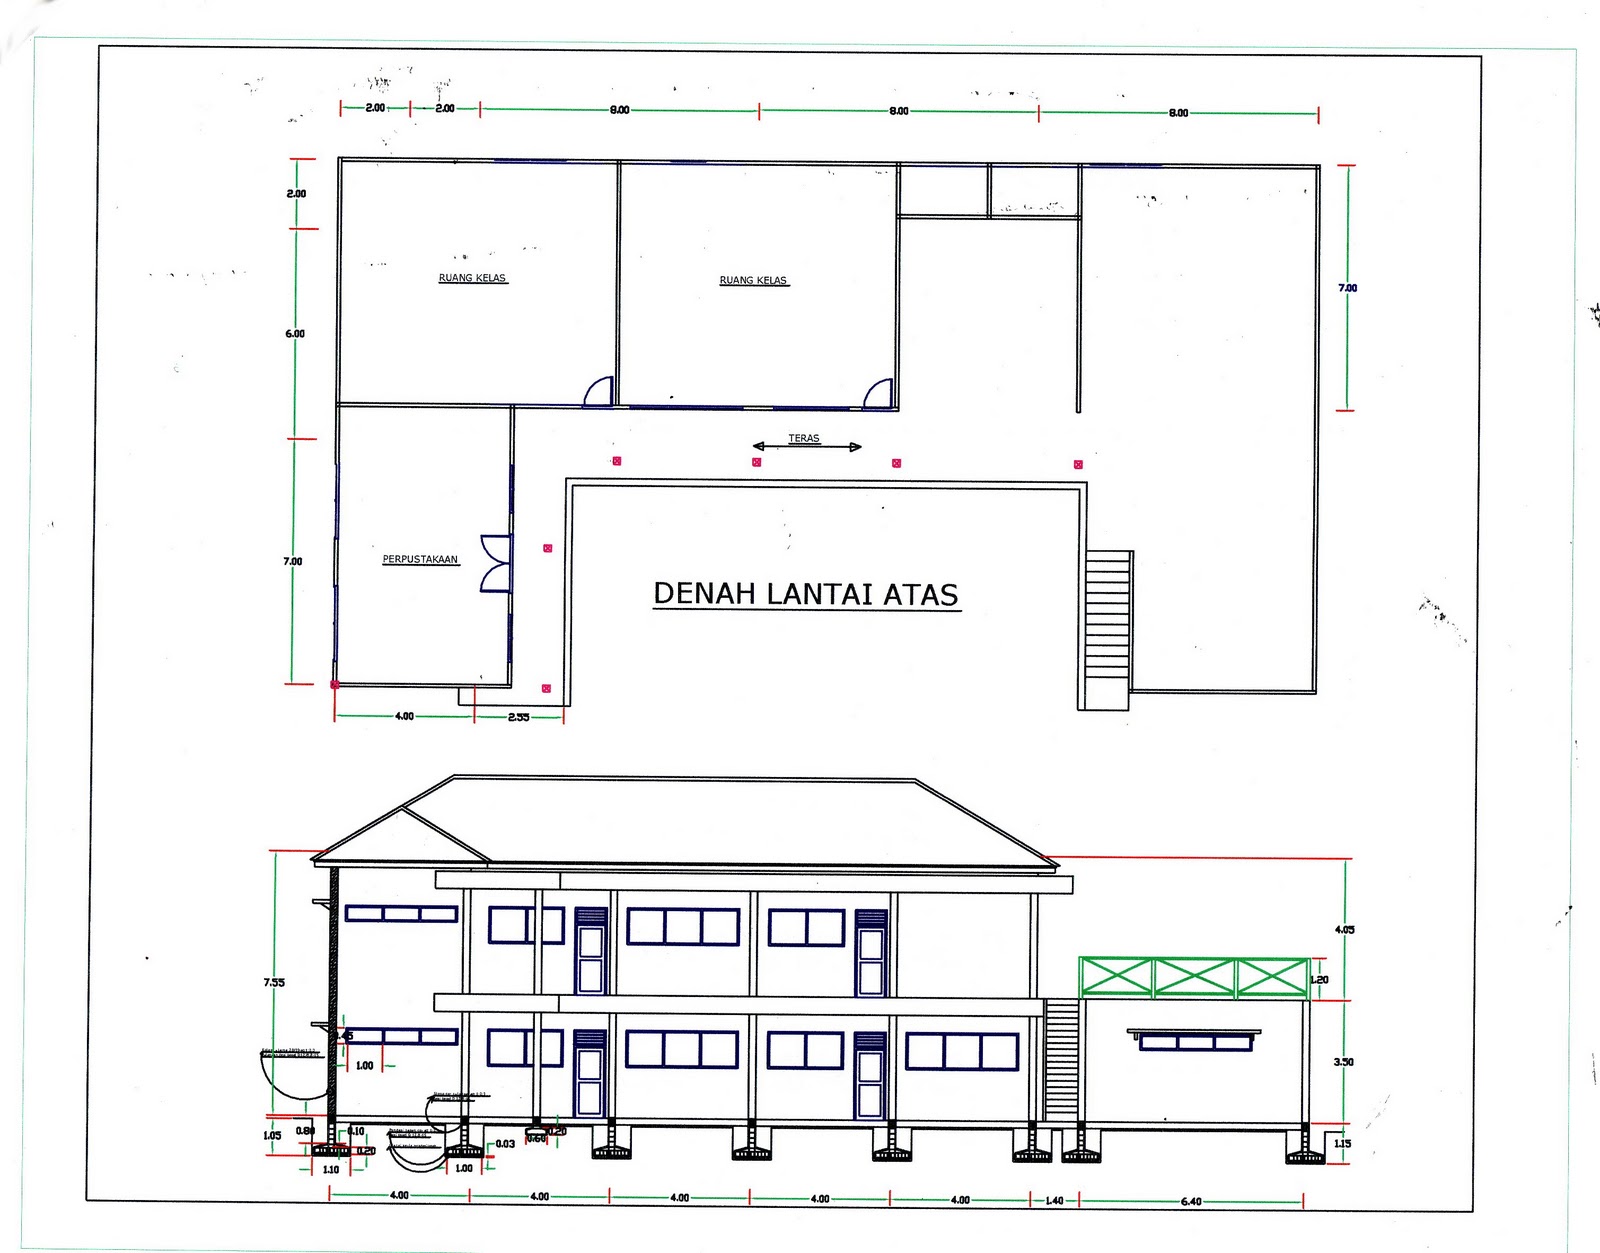 PADEPOKAN SANTRI KYAI JAMAS Rencana Gambar Bangunan Madrasah